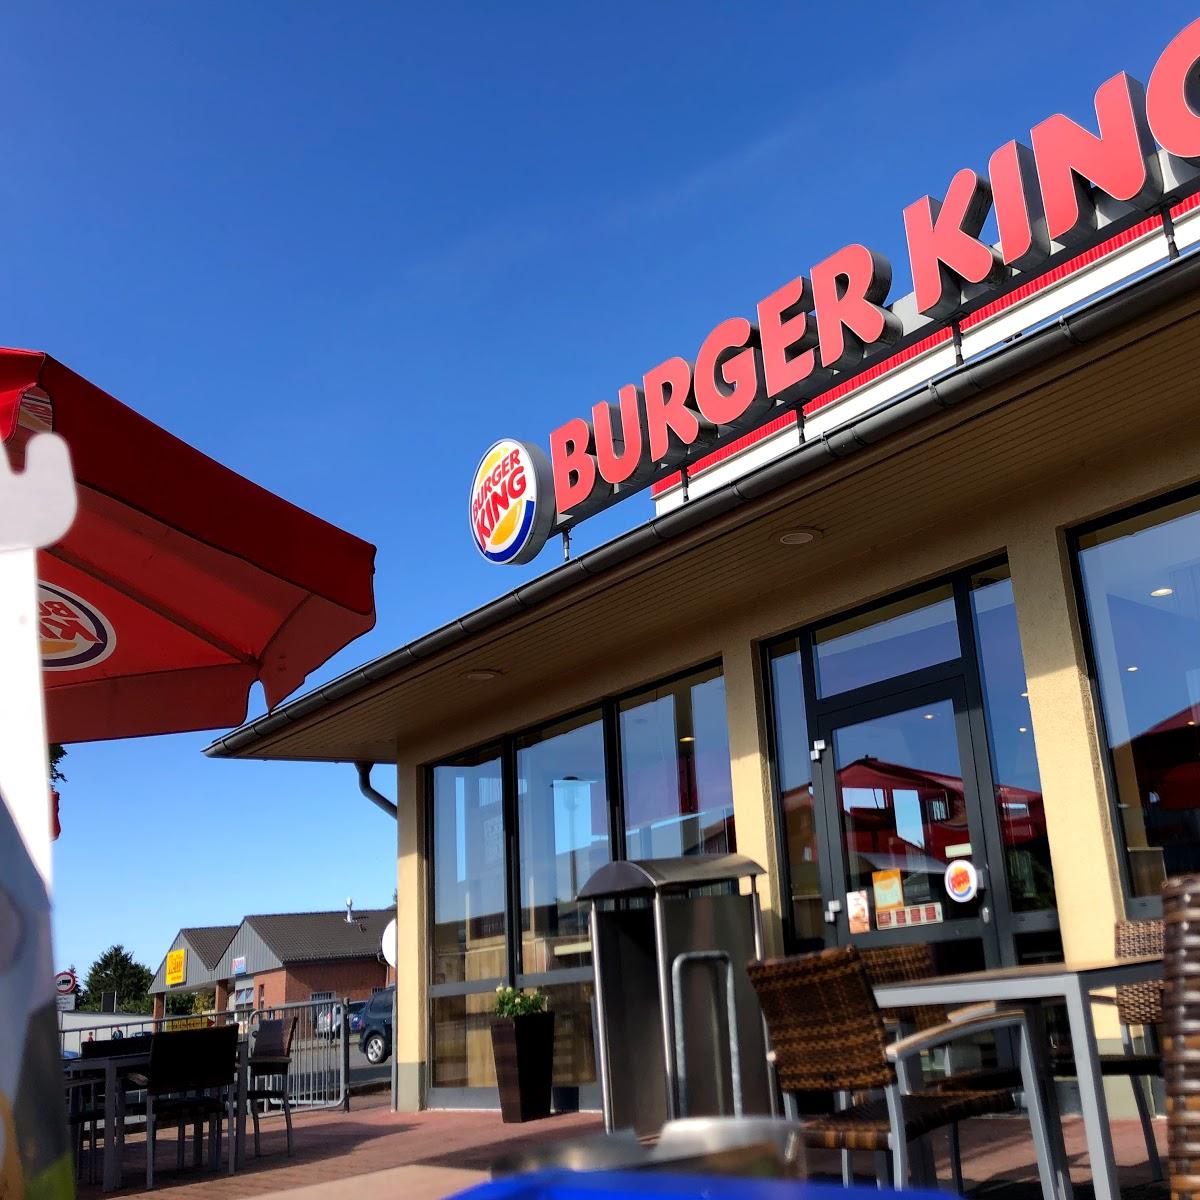 Restaurant "Burger King" in Hamm